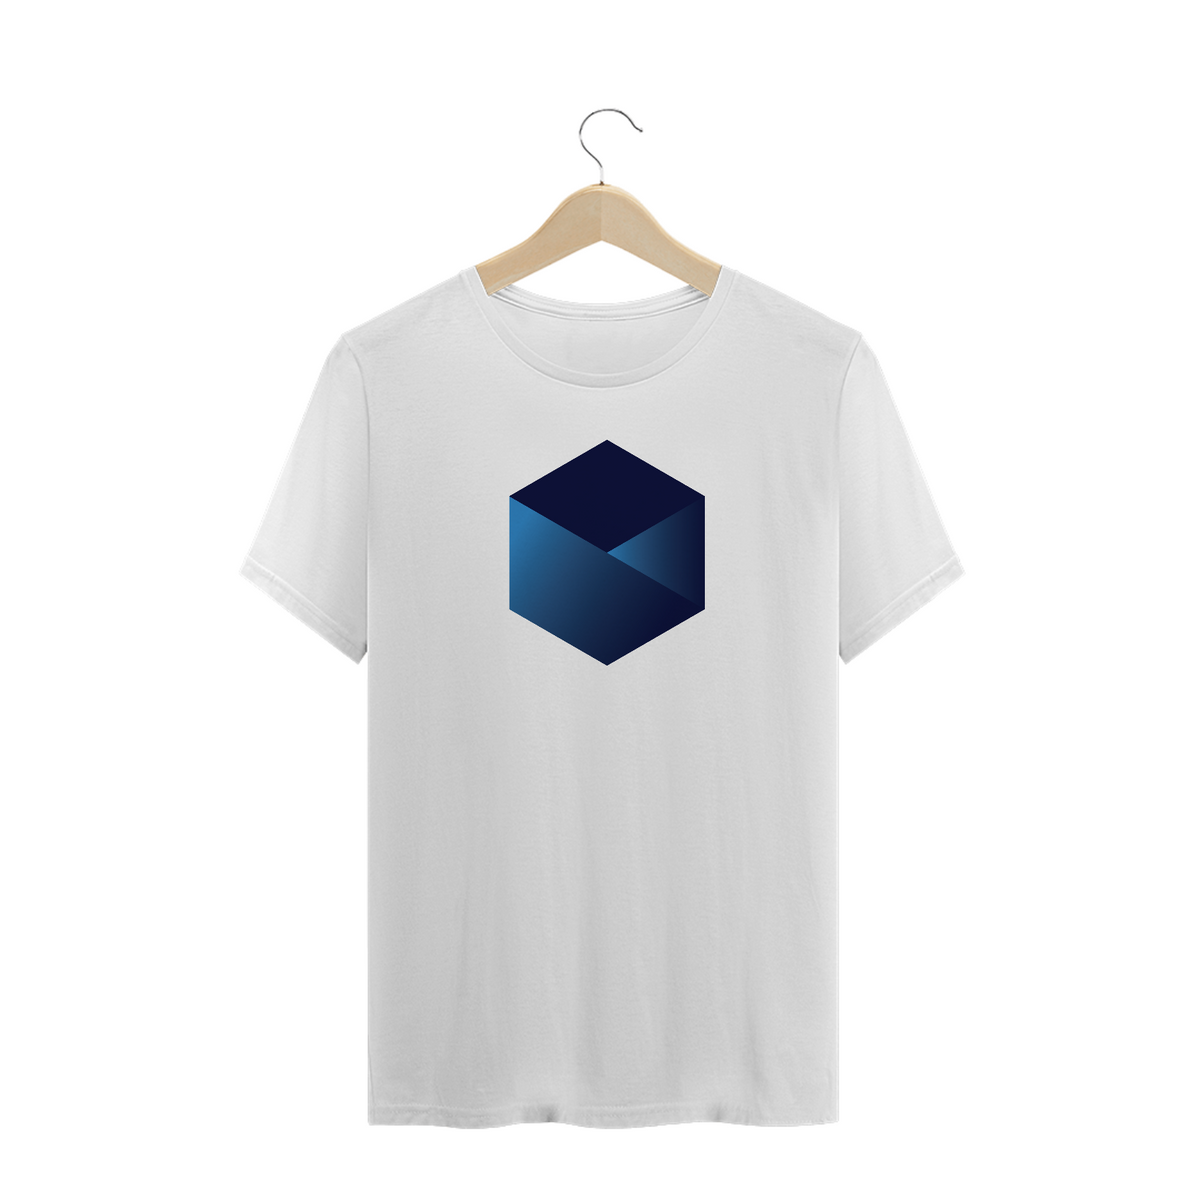 Nome do produto: Criptos - Camisa Logo Gemma